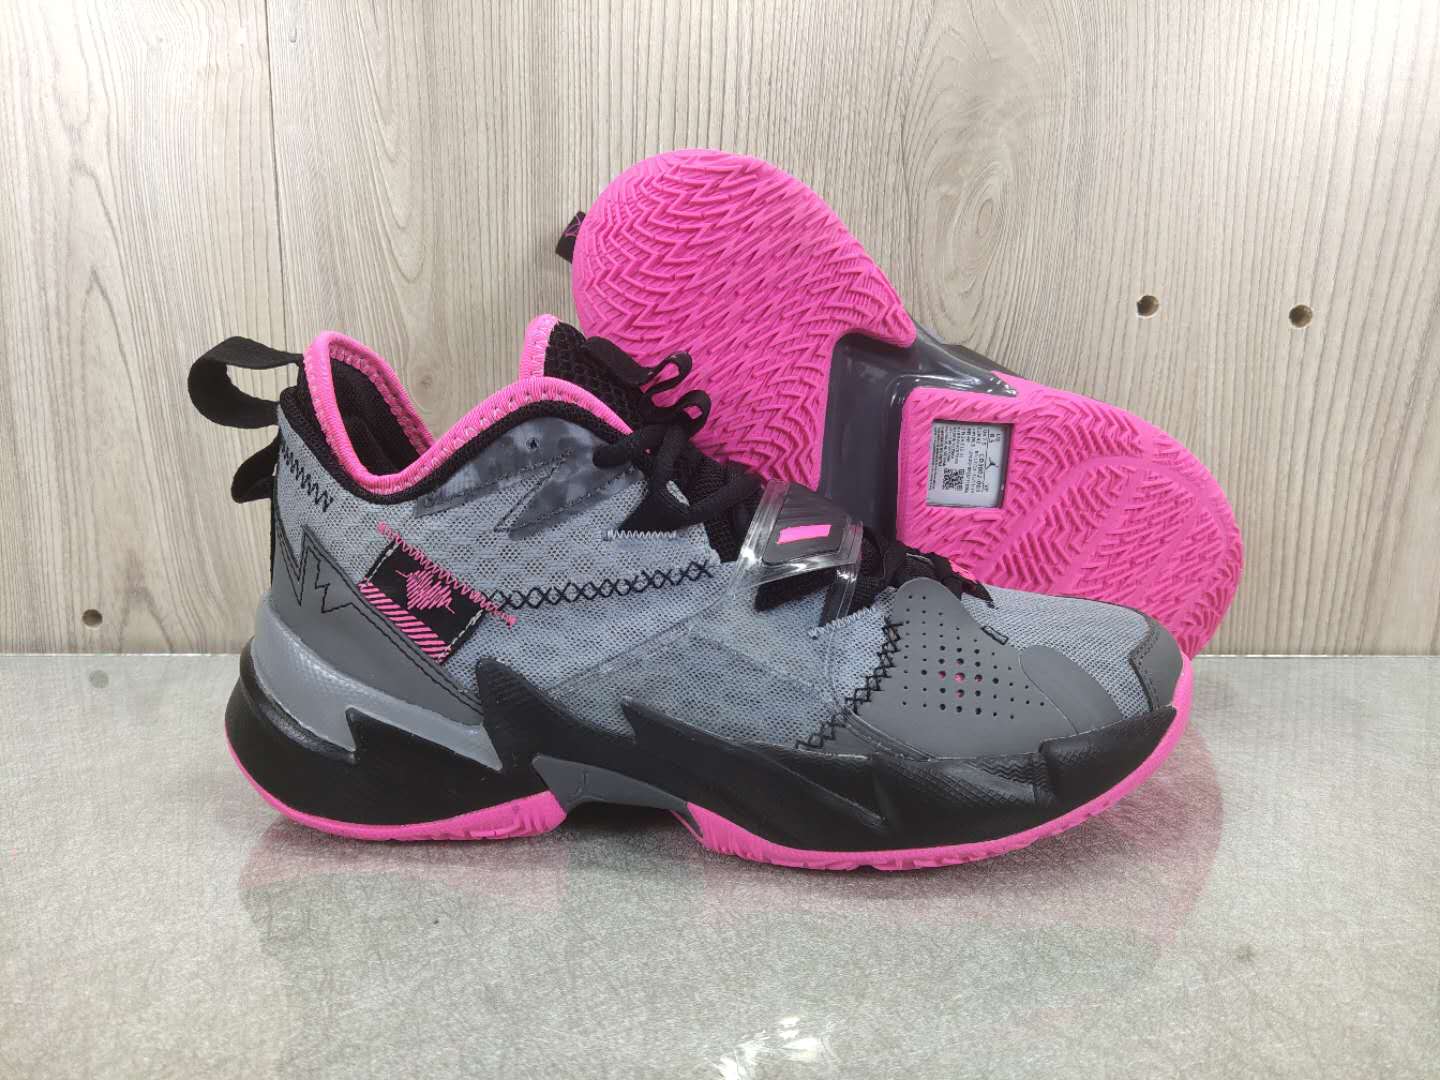 Jordan Why Not Zer0.3 Grey Black Pink Shoes